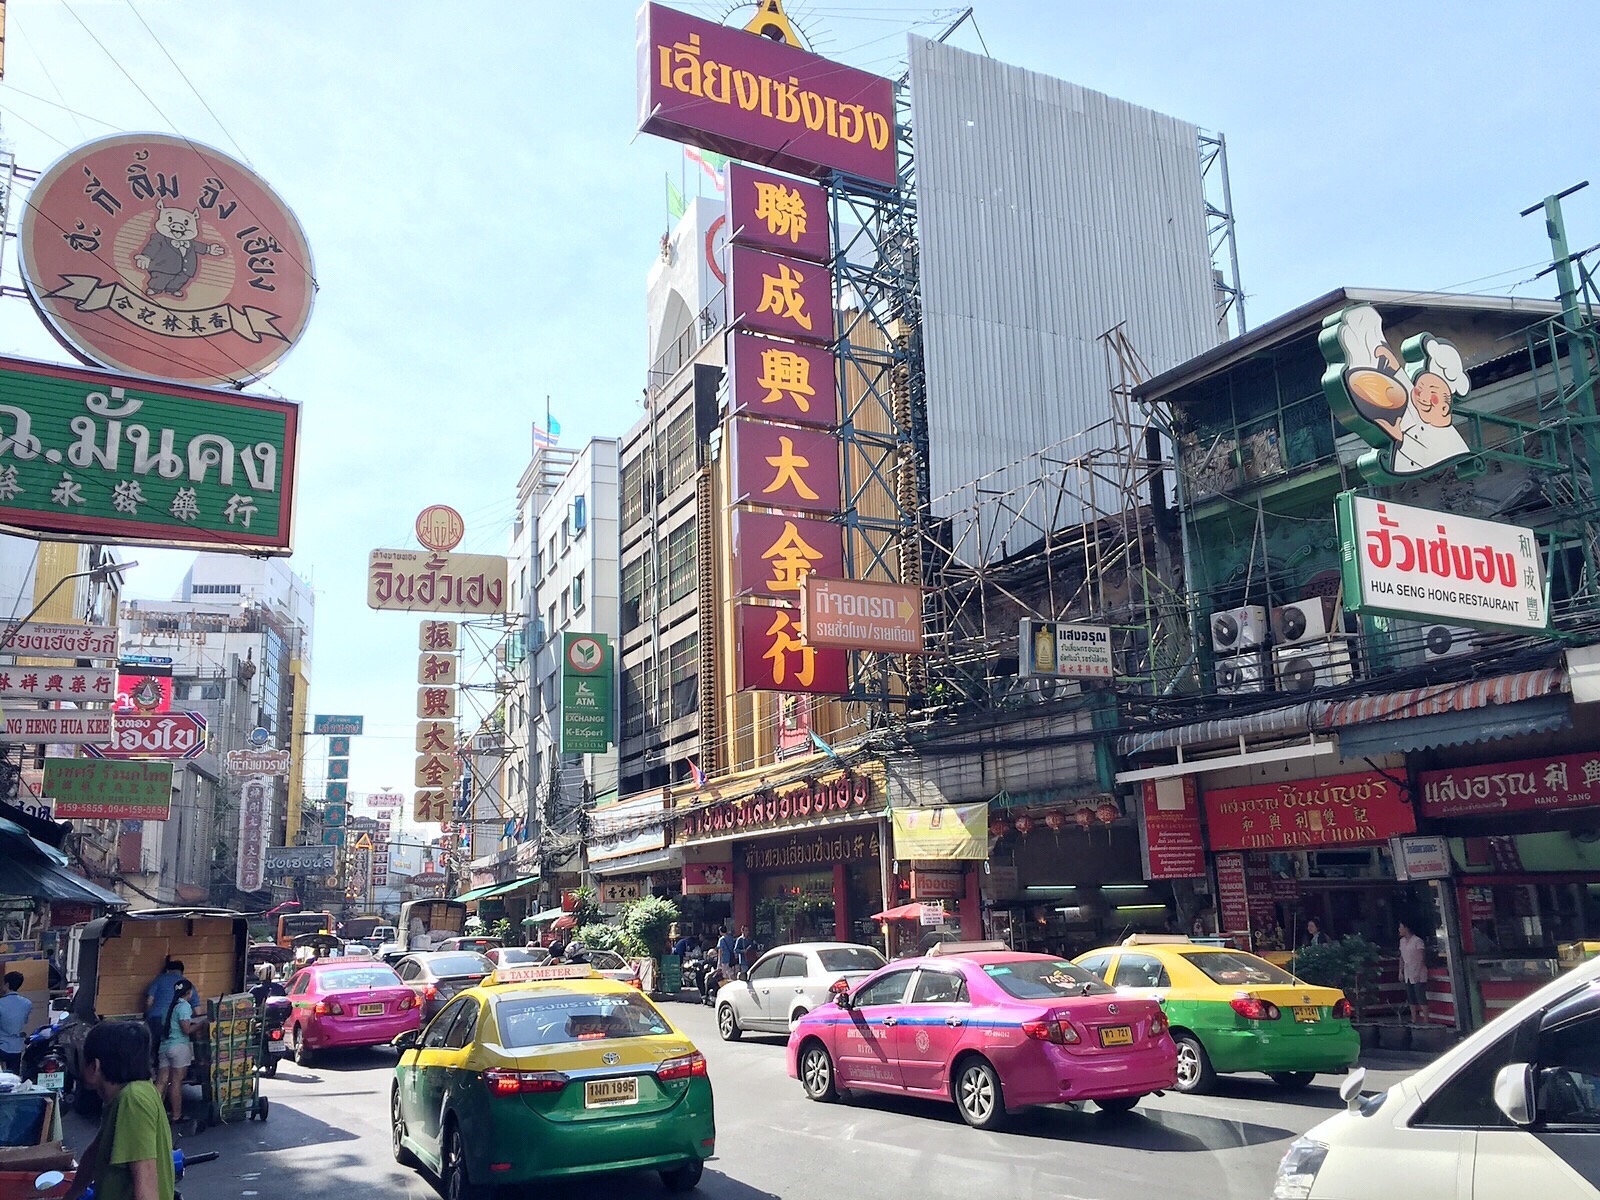 Chinatown main street in Bangkok